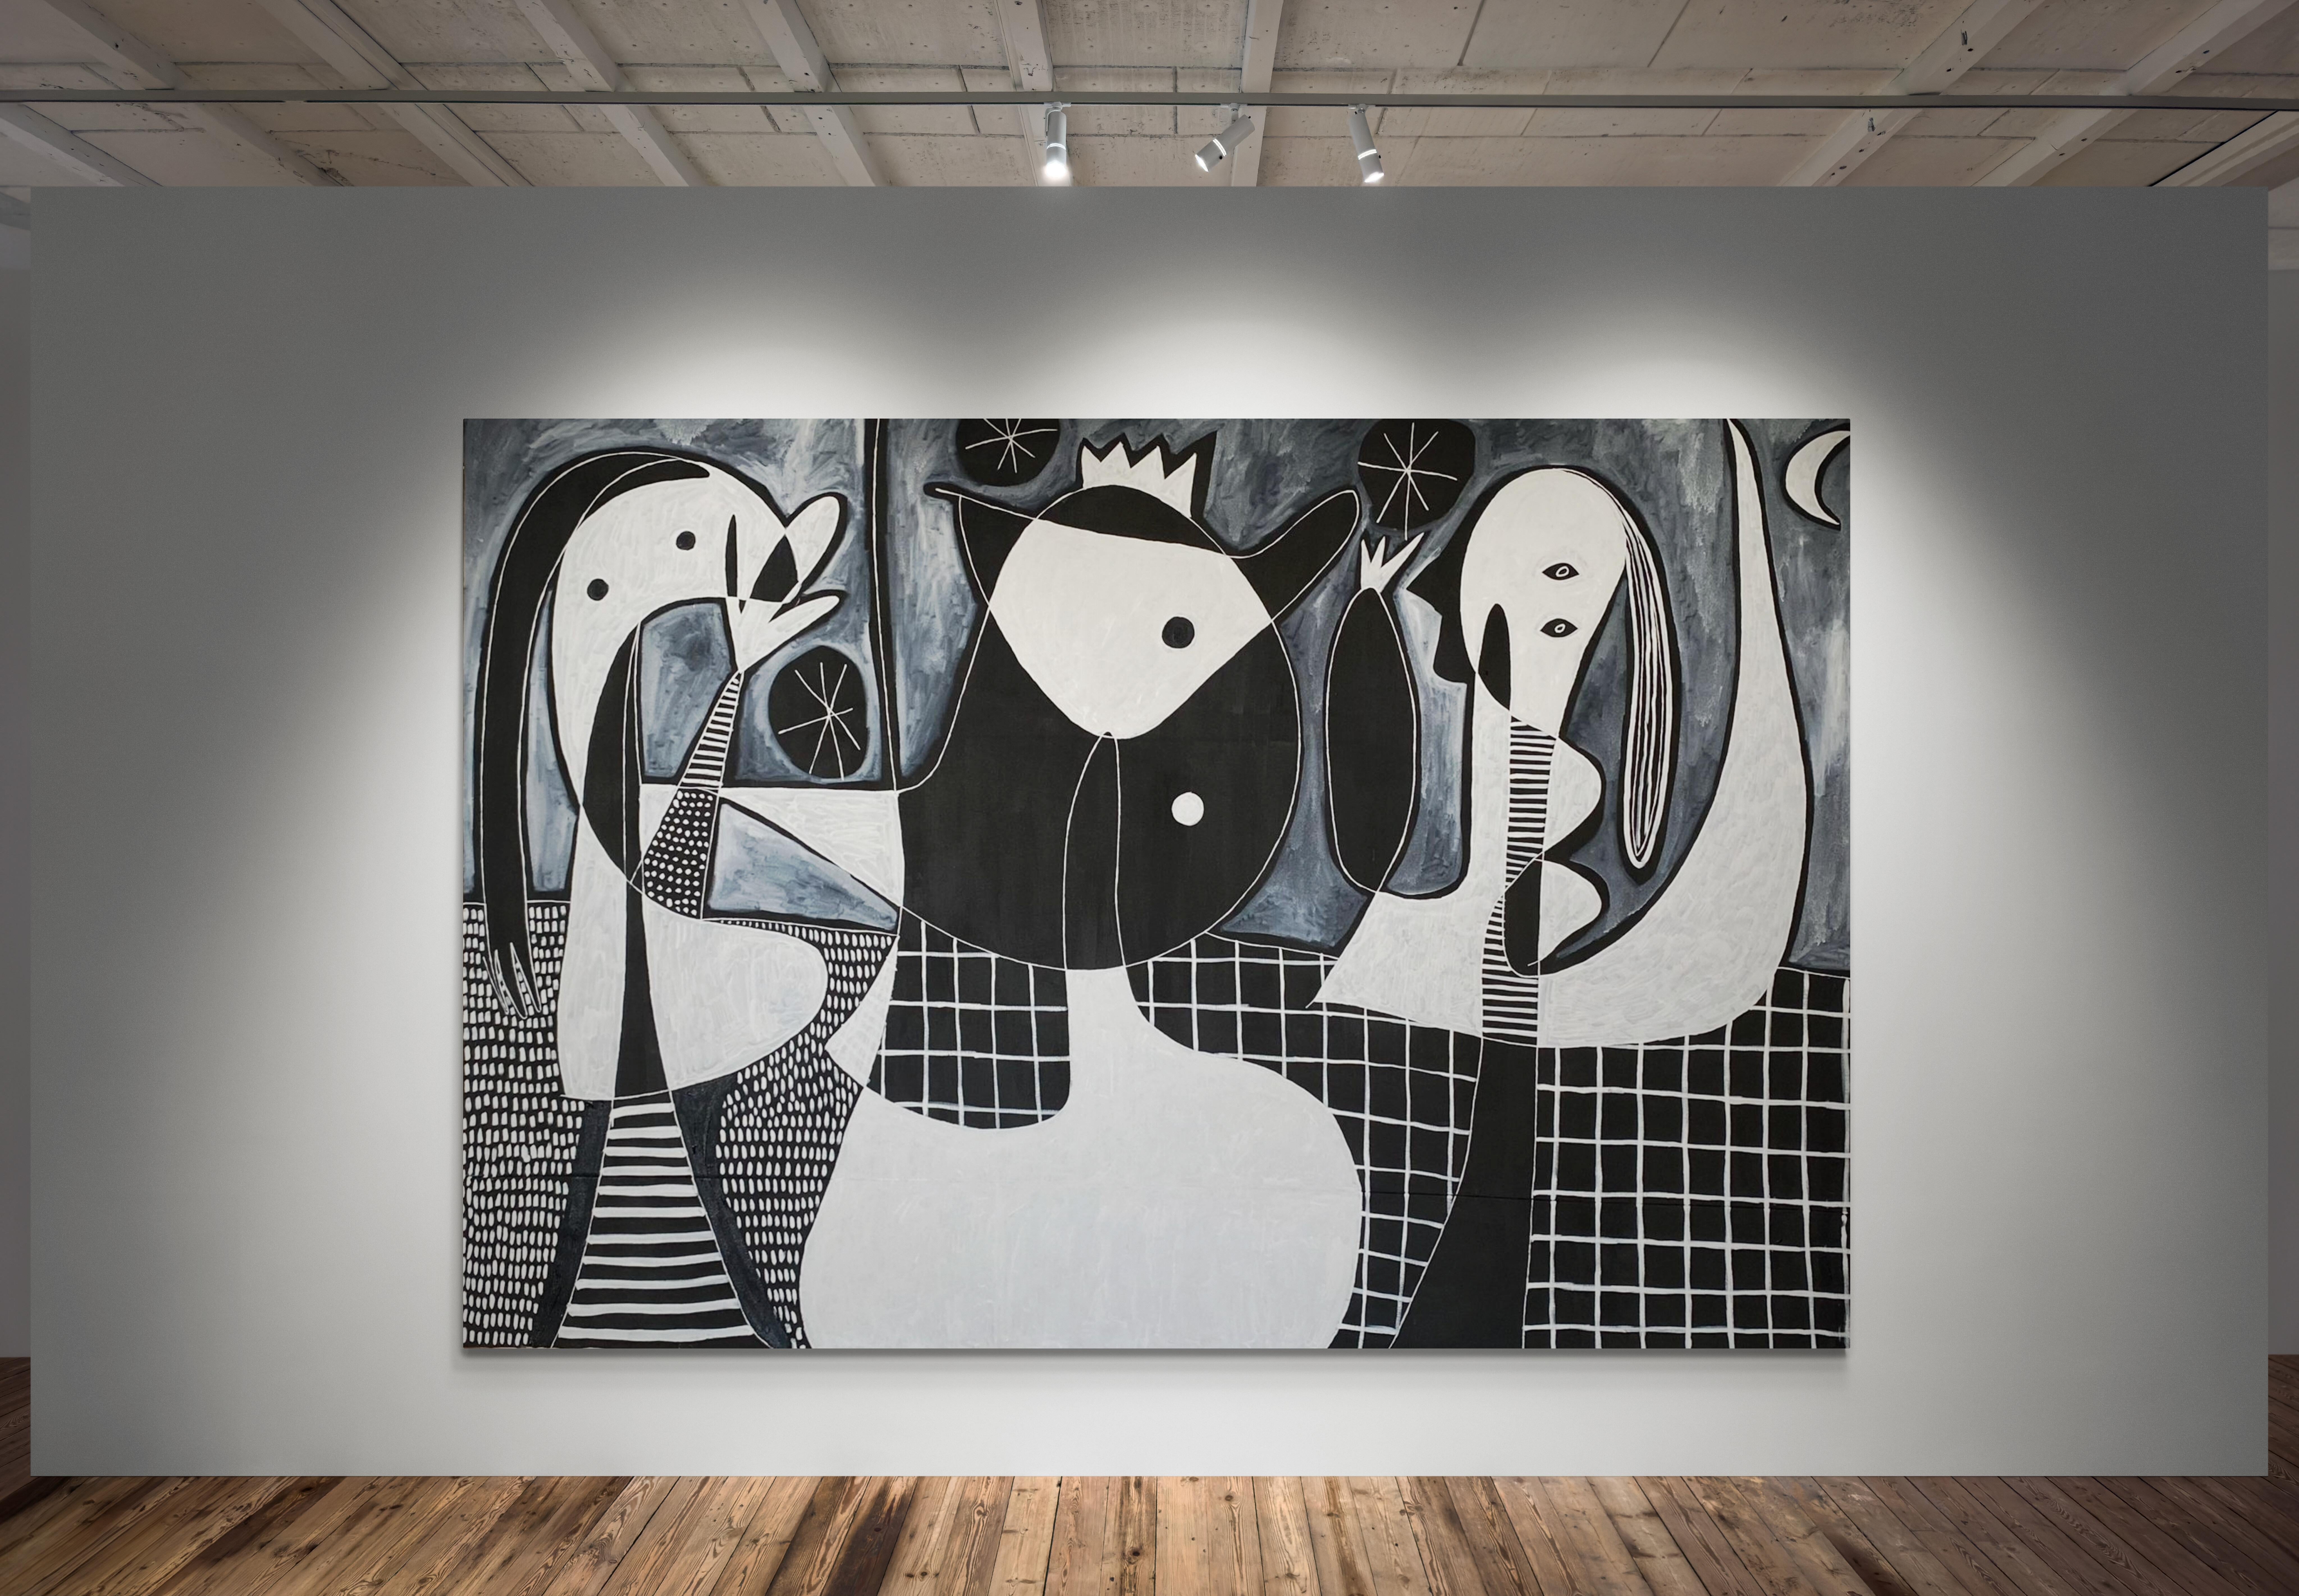 Contemporary Art, Abstract Painting
Acrylic on canvas
185x270cm
Signed 
FREE SHIPPING ROLLED UP




About the artist
Enrique Pichardo (Mexico City, 1973) graduated from Escuela Nacional de Pintura, Escultura y Grabado (ENPEG) “La Esmeralda”. As a